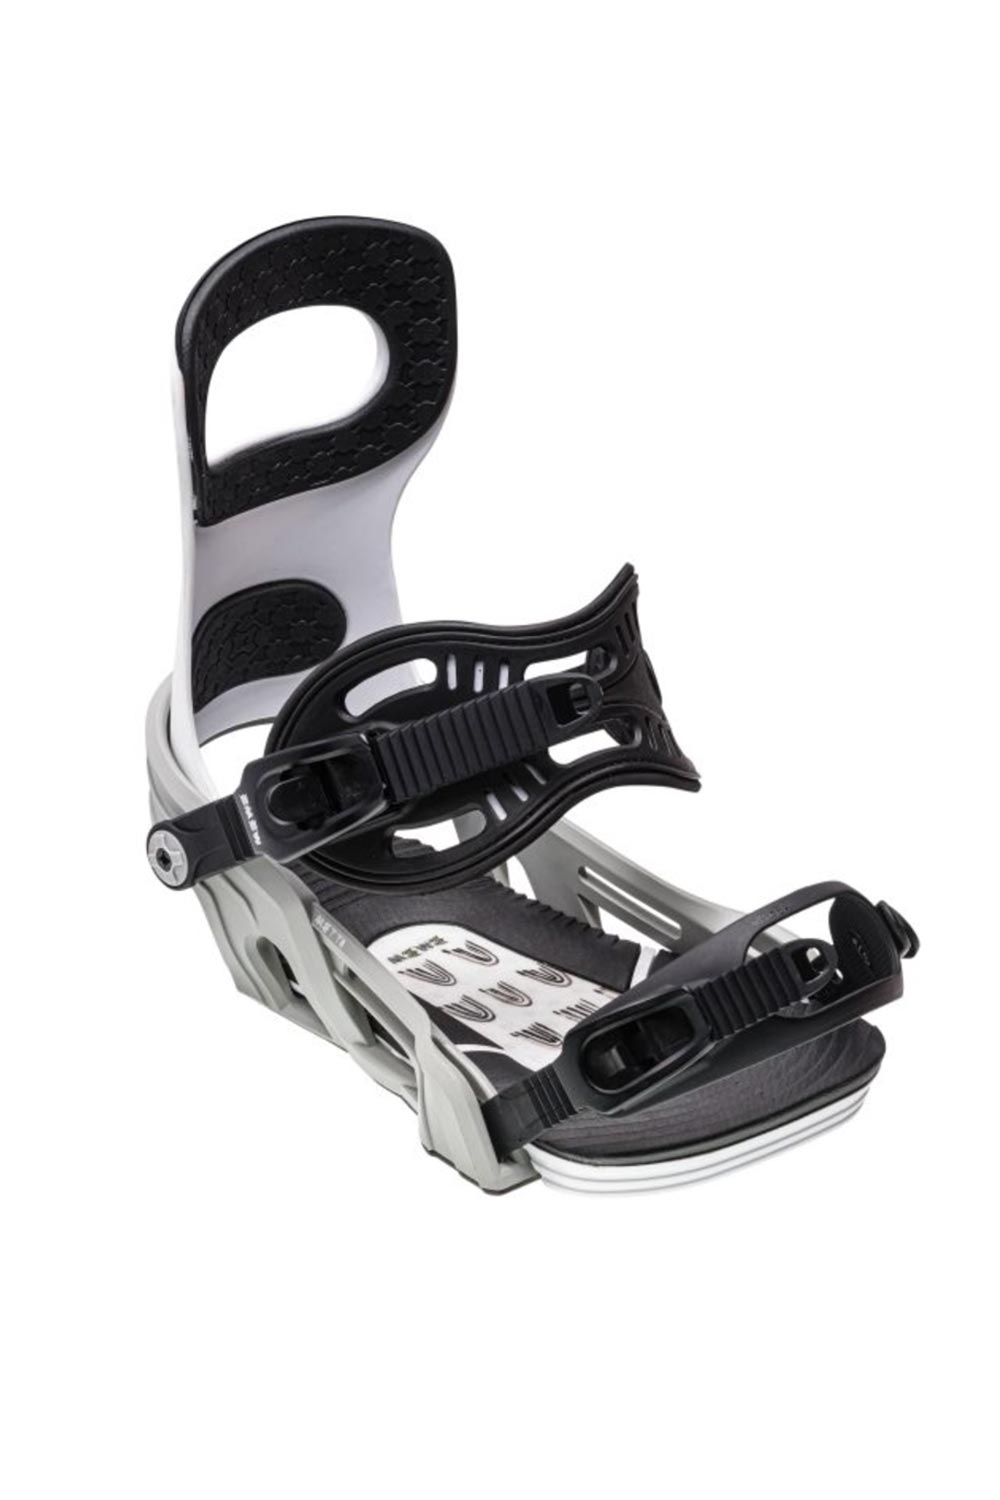 bent metal metta snowboard binding, white with black buckles